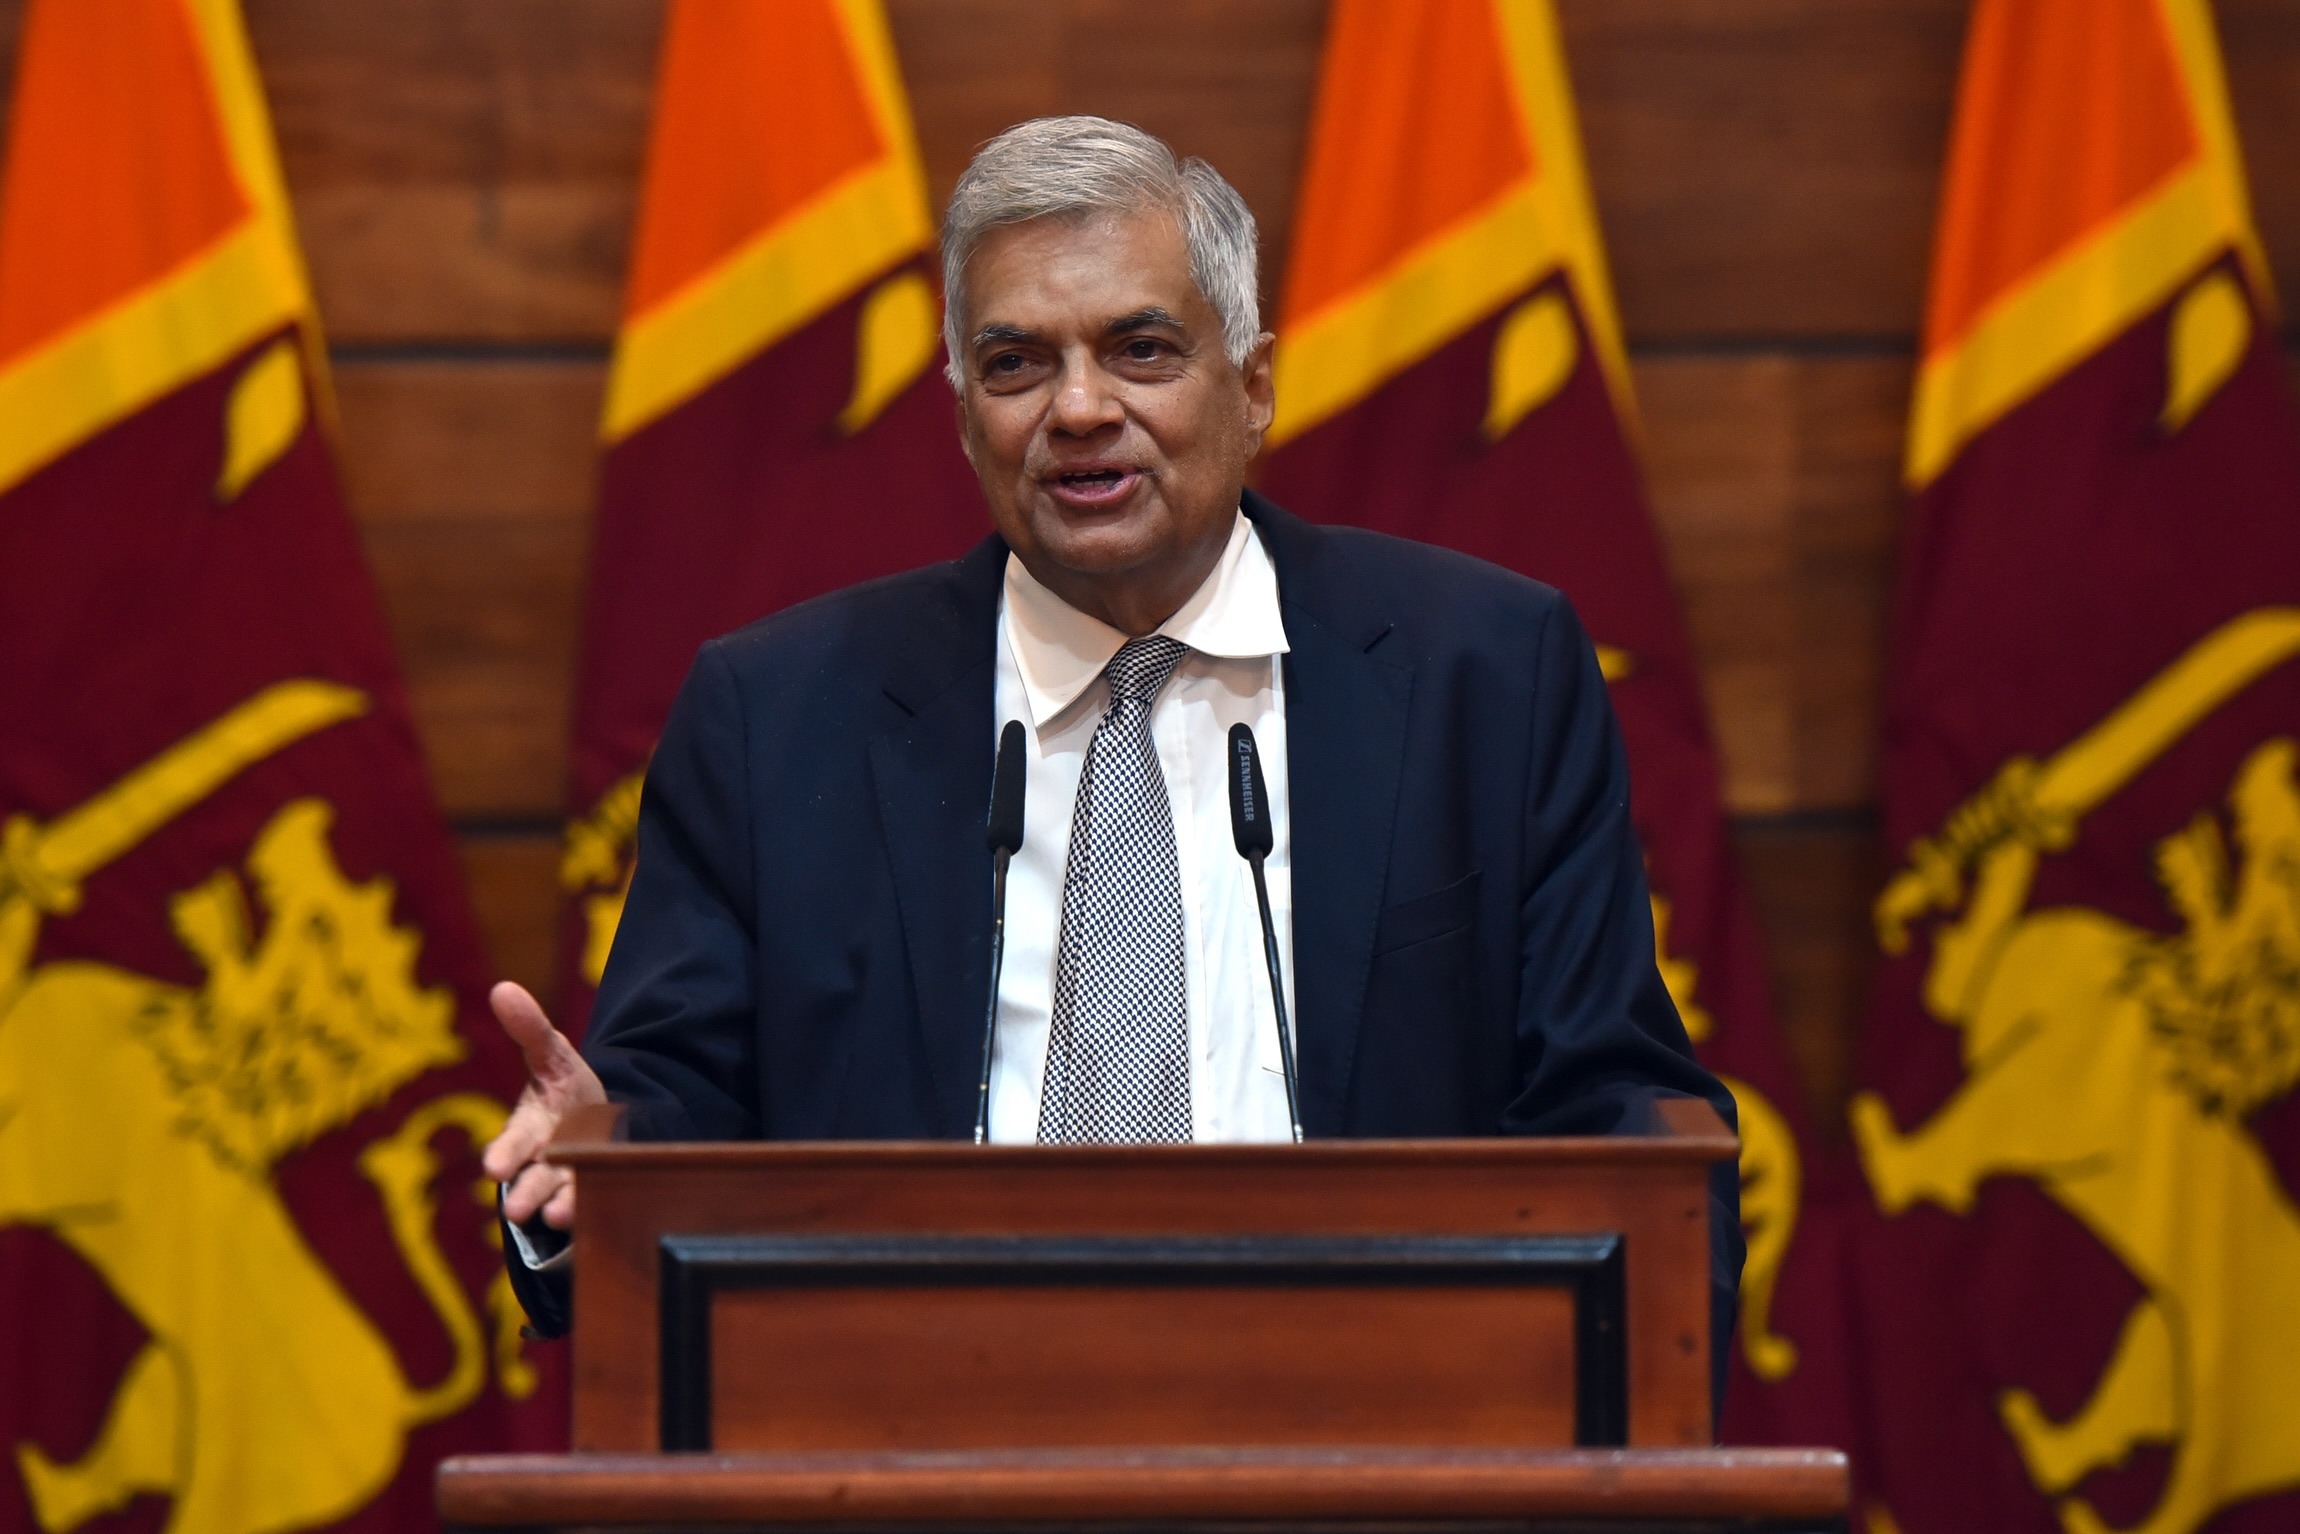 Sri Lanka Prime Minister Ranil Wickremesinghe at the press conference in Colombo on 23rd April 2019